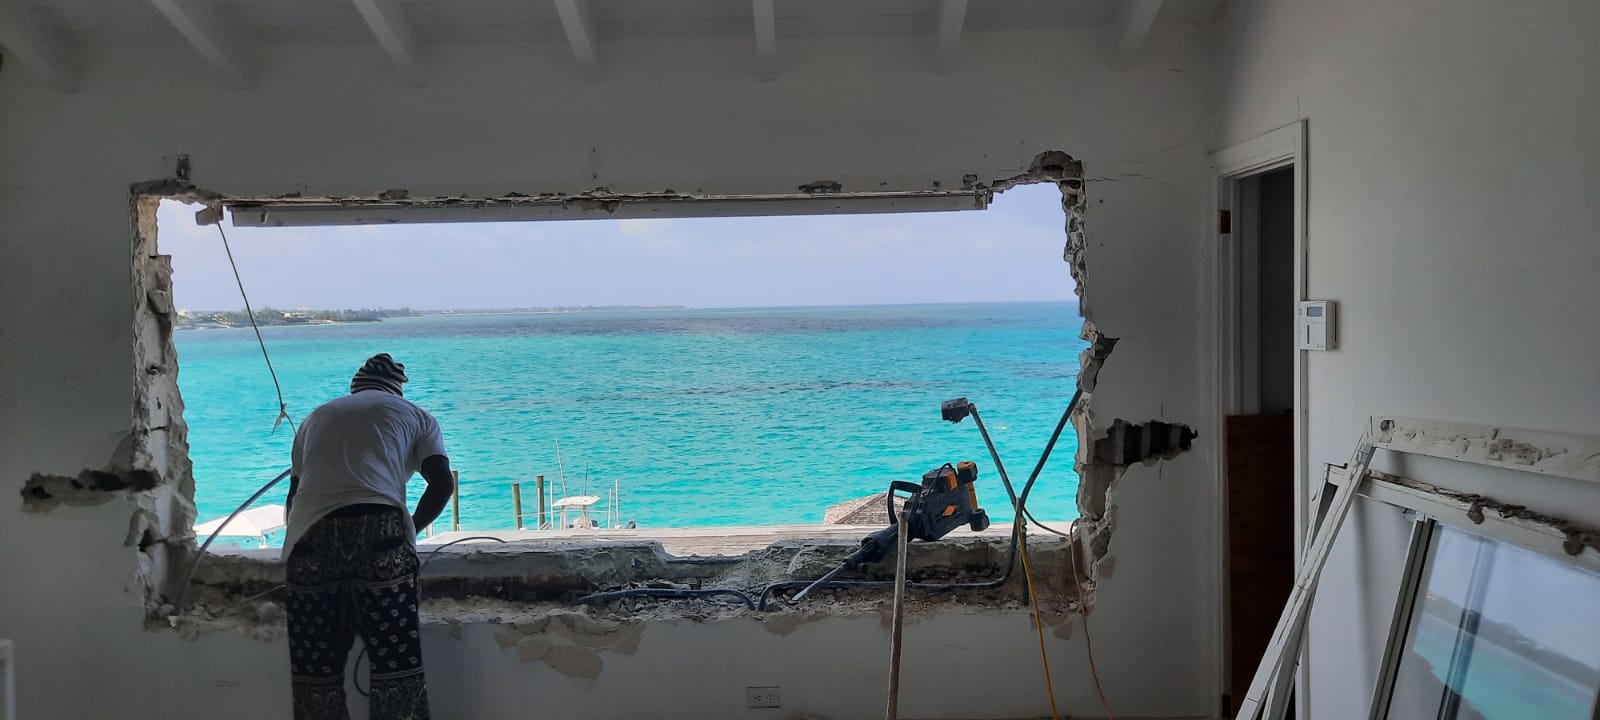 new window nassau bahamas